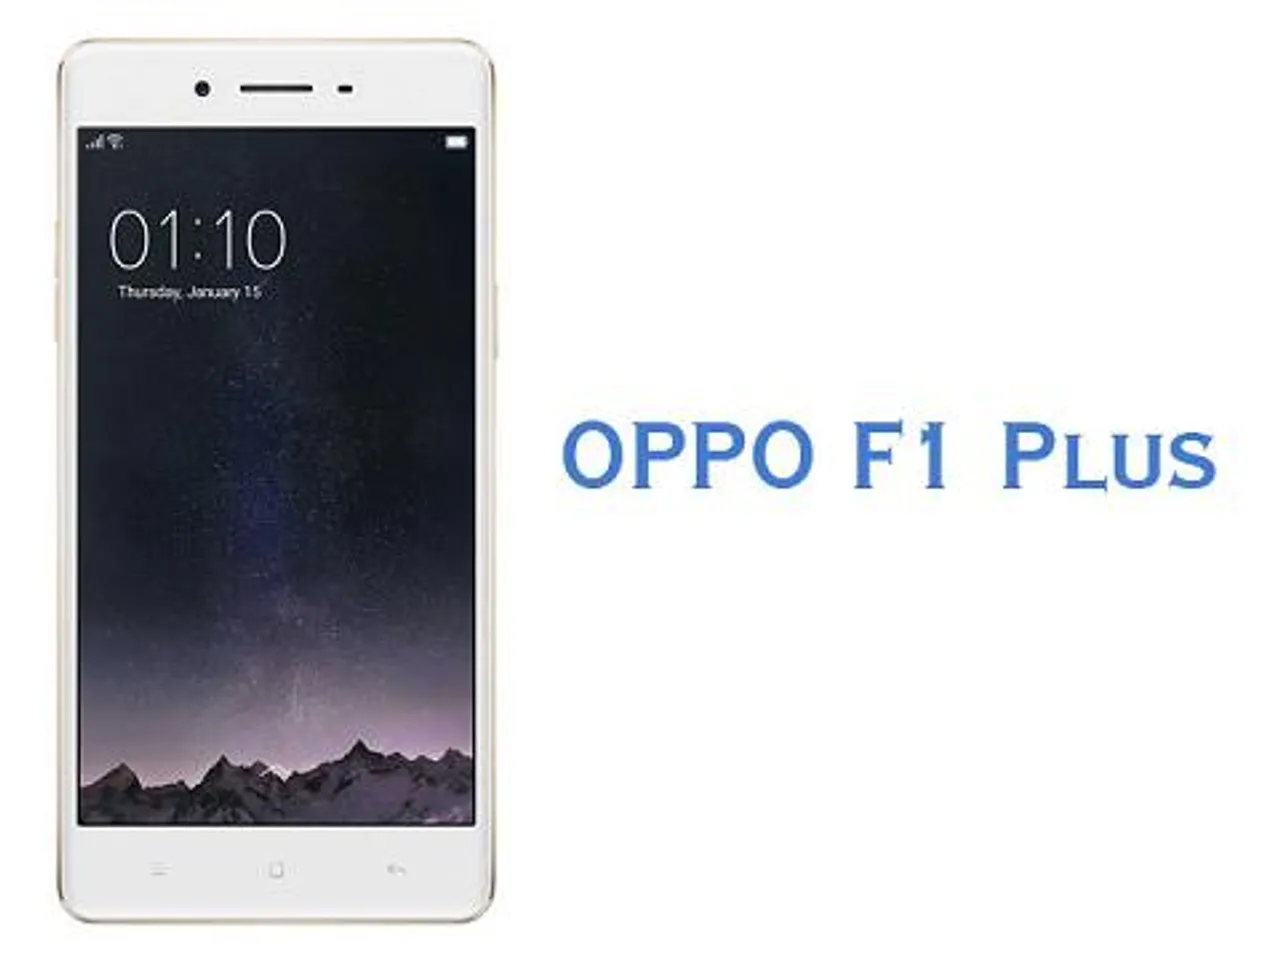 OPPO F1 Plus earmarks 7 million unit global sales